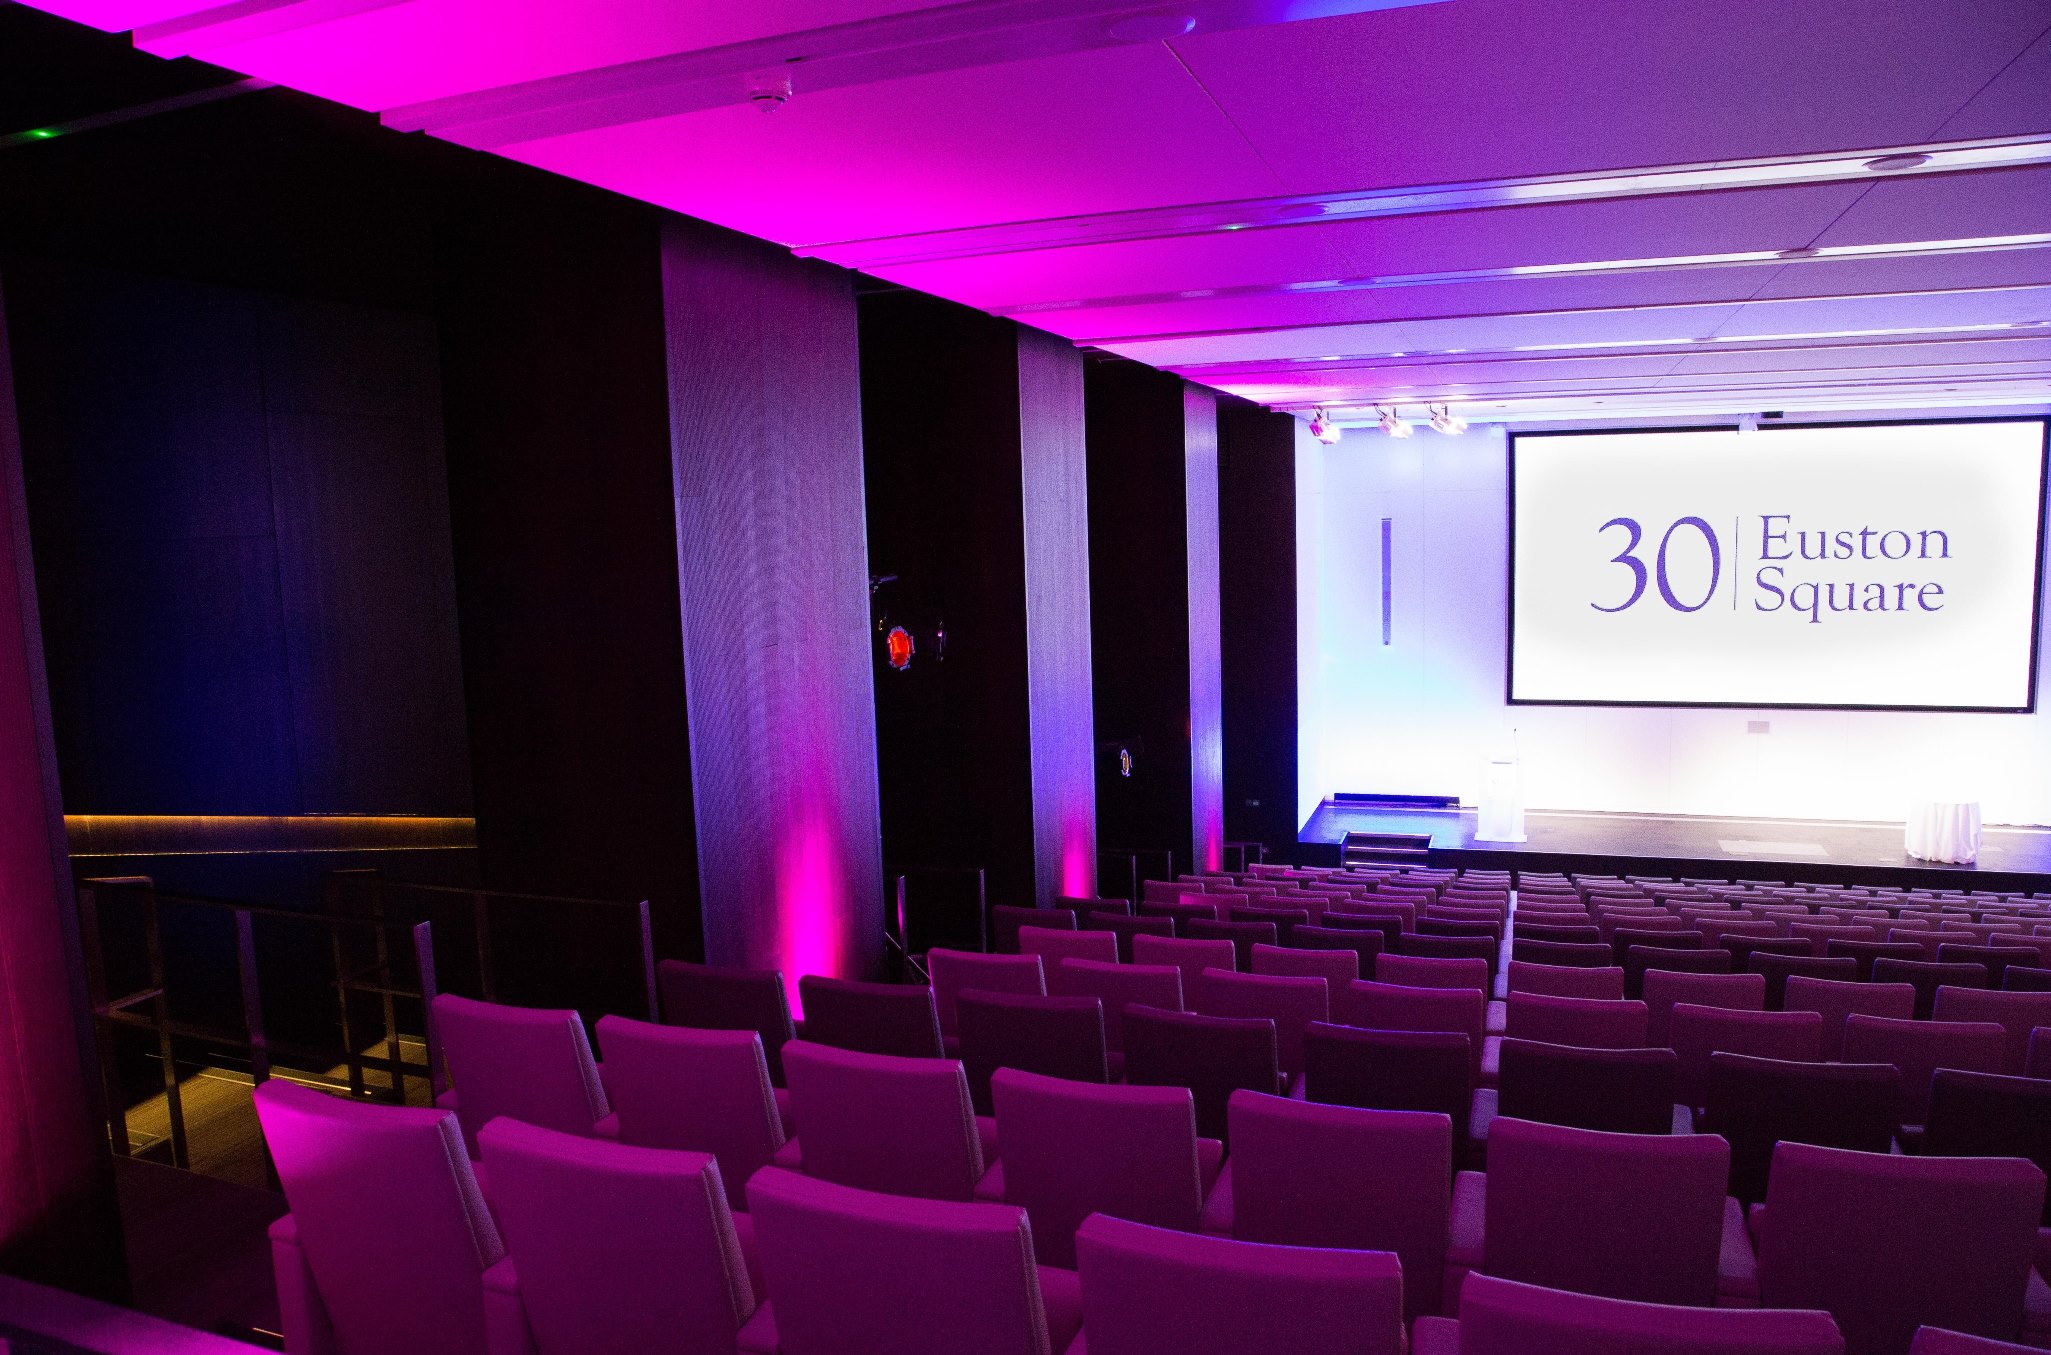 Auditorium pink lighting  in empty venue space